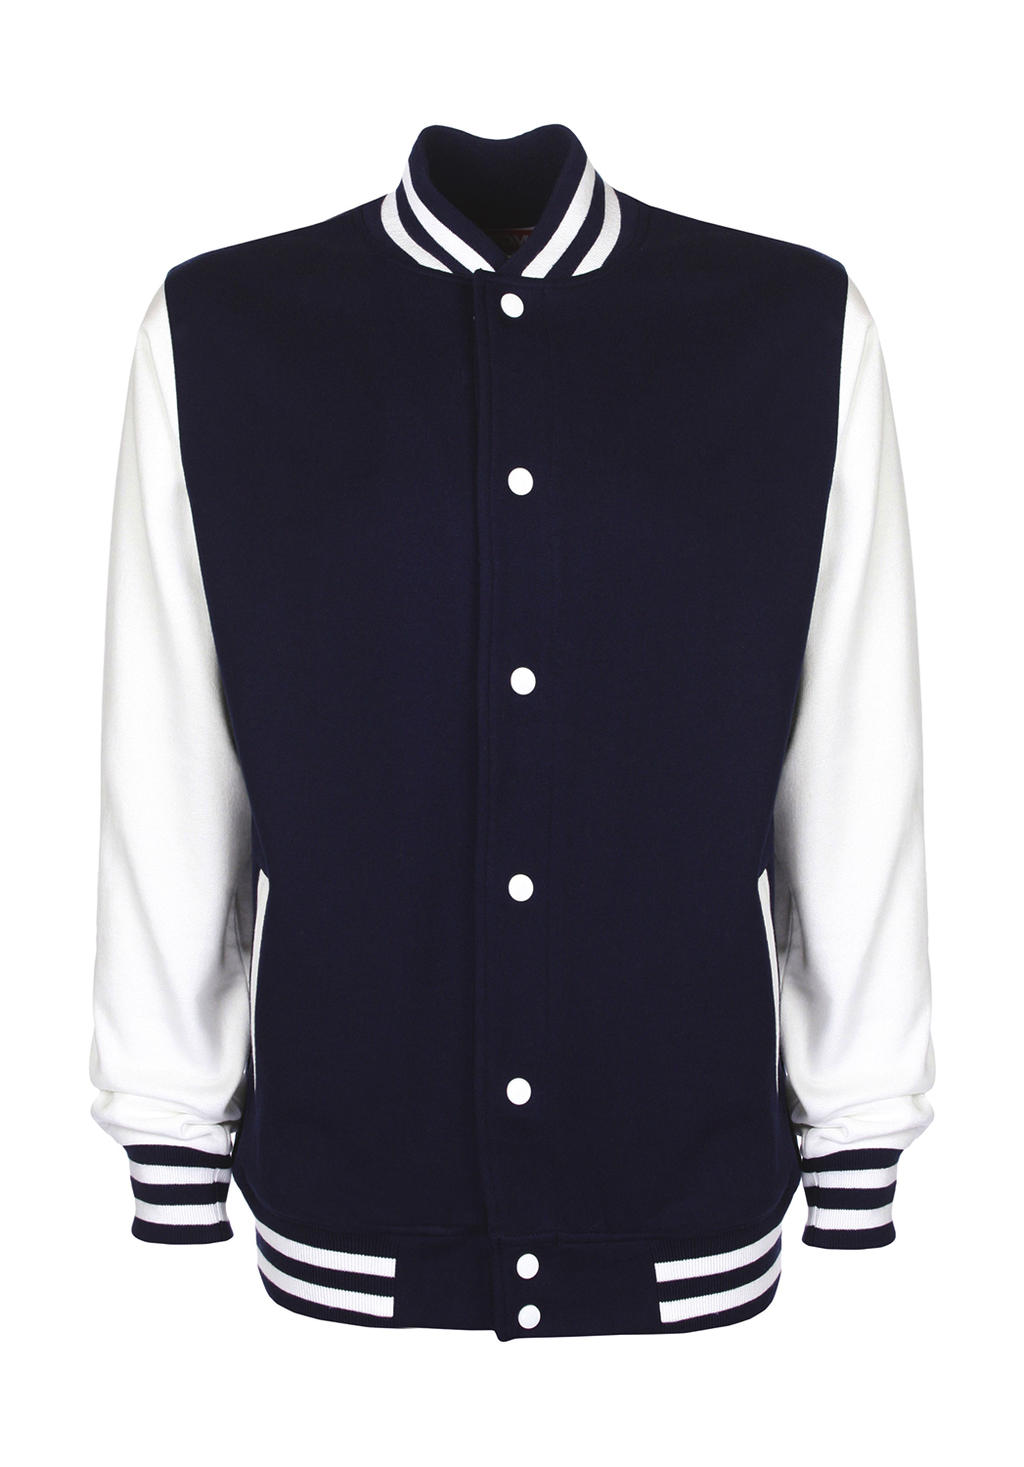  Varsity Jacket in Farbe Navy/White